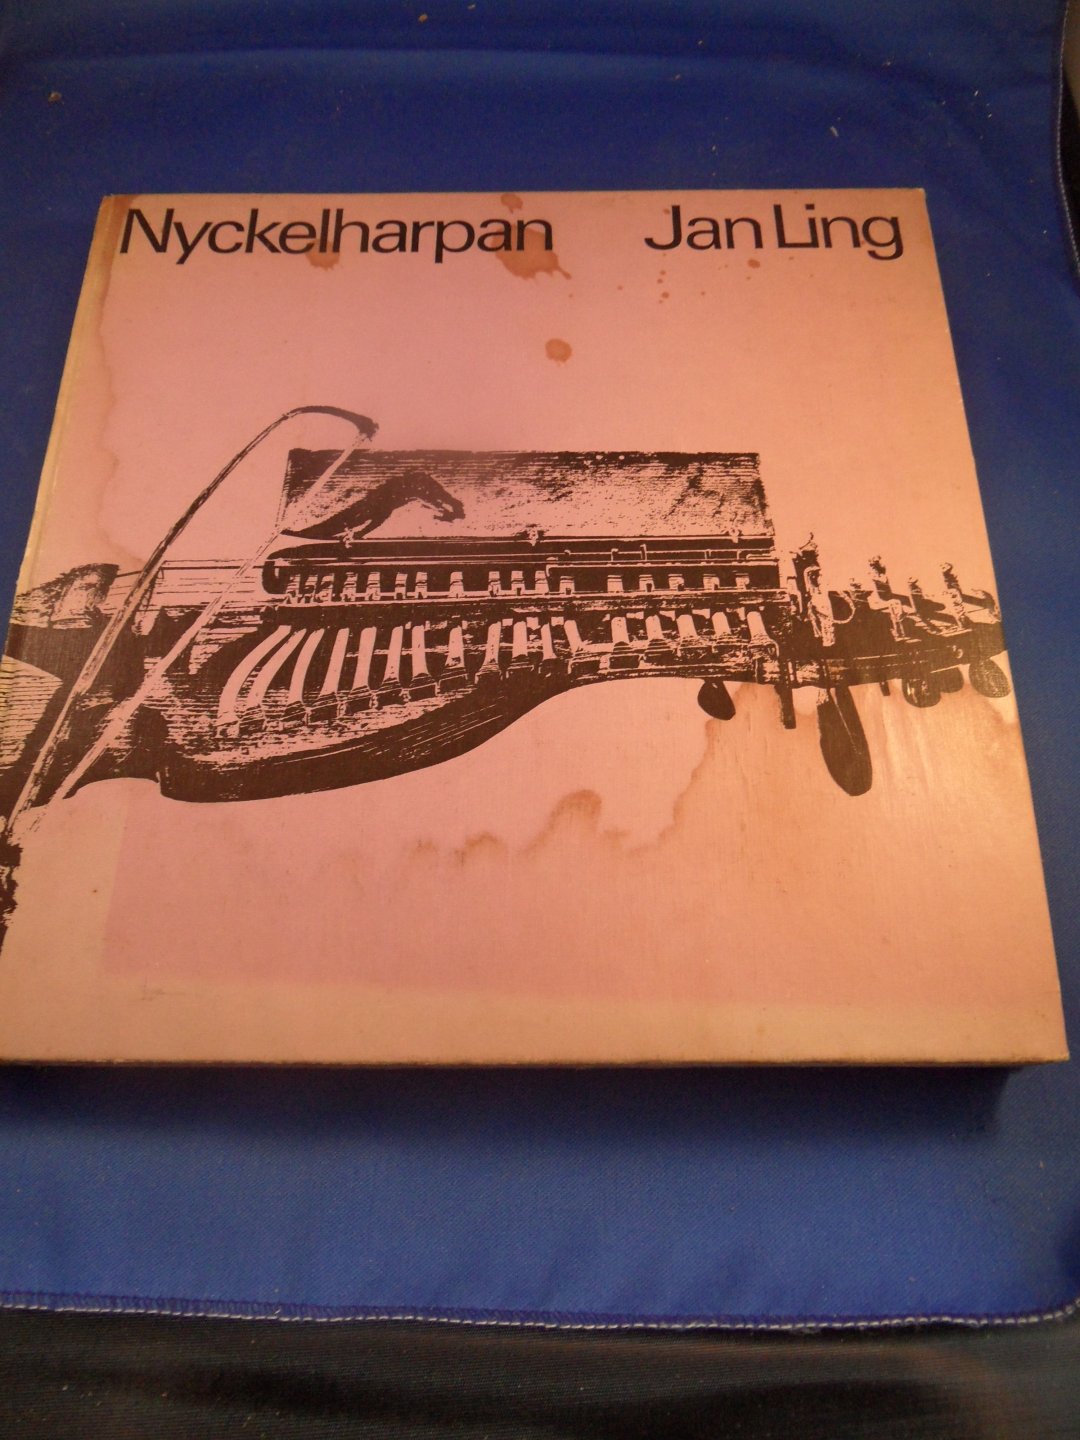 Ling, Jan - Nyckelharpan